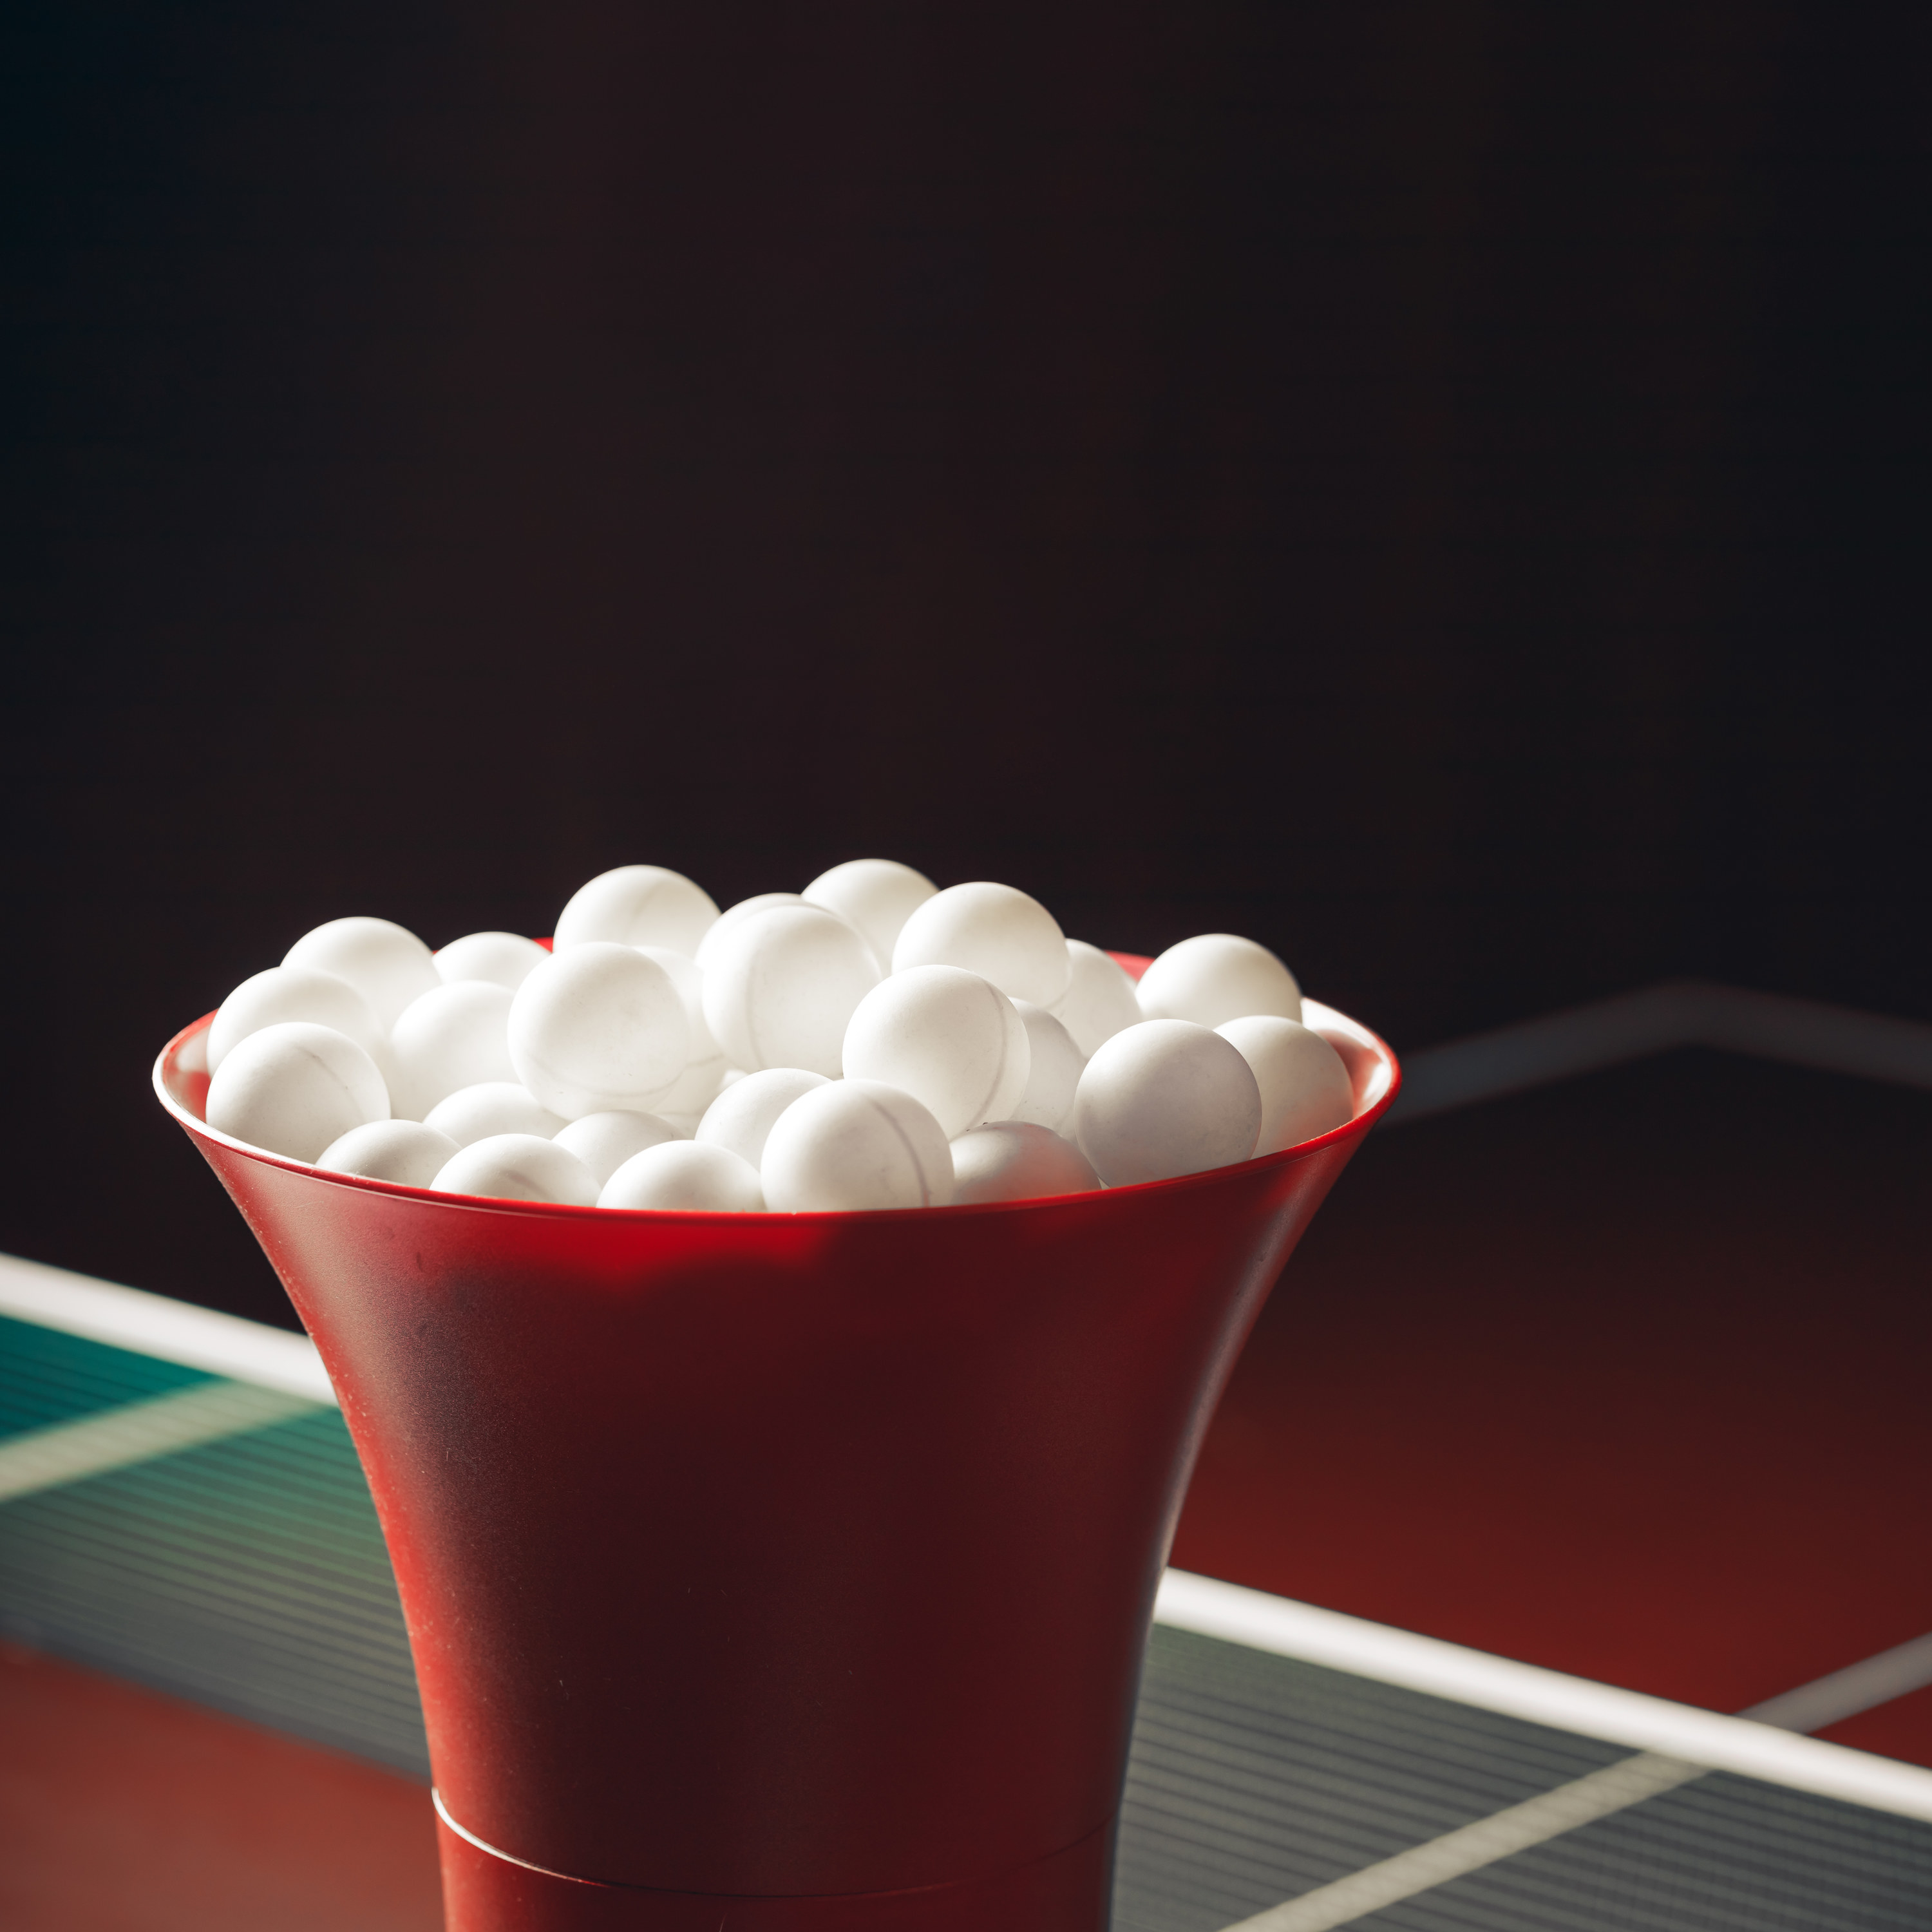 A bucket of ping pong balls